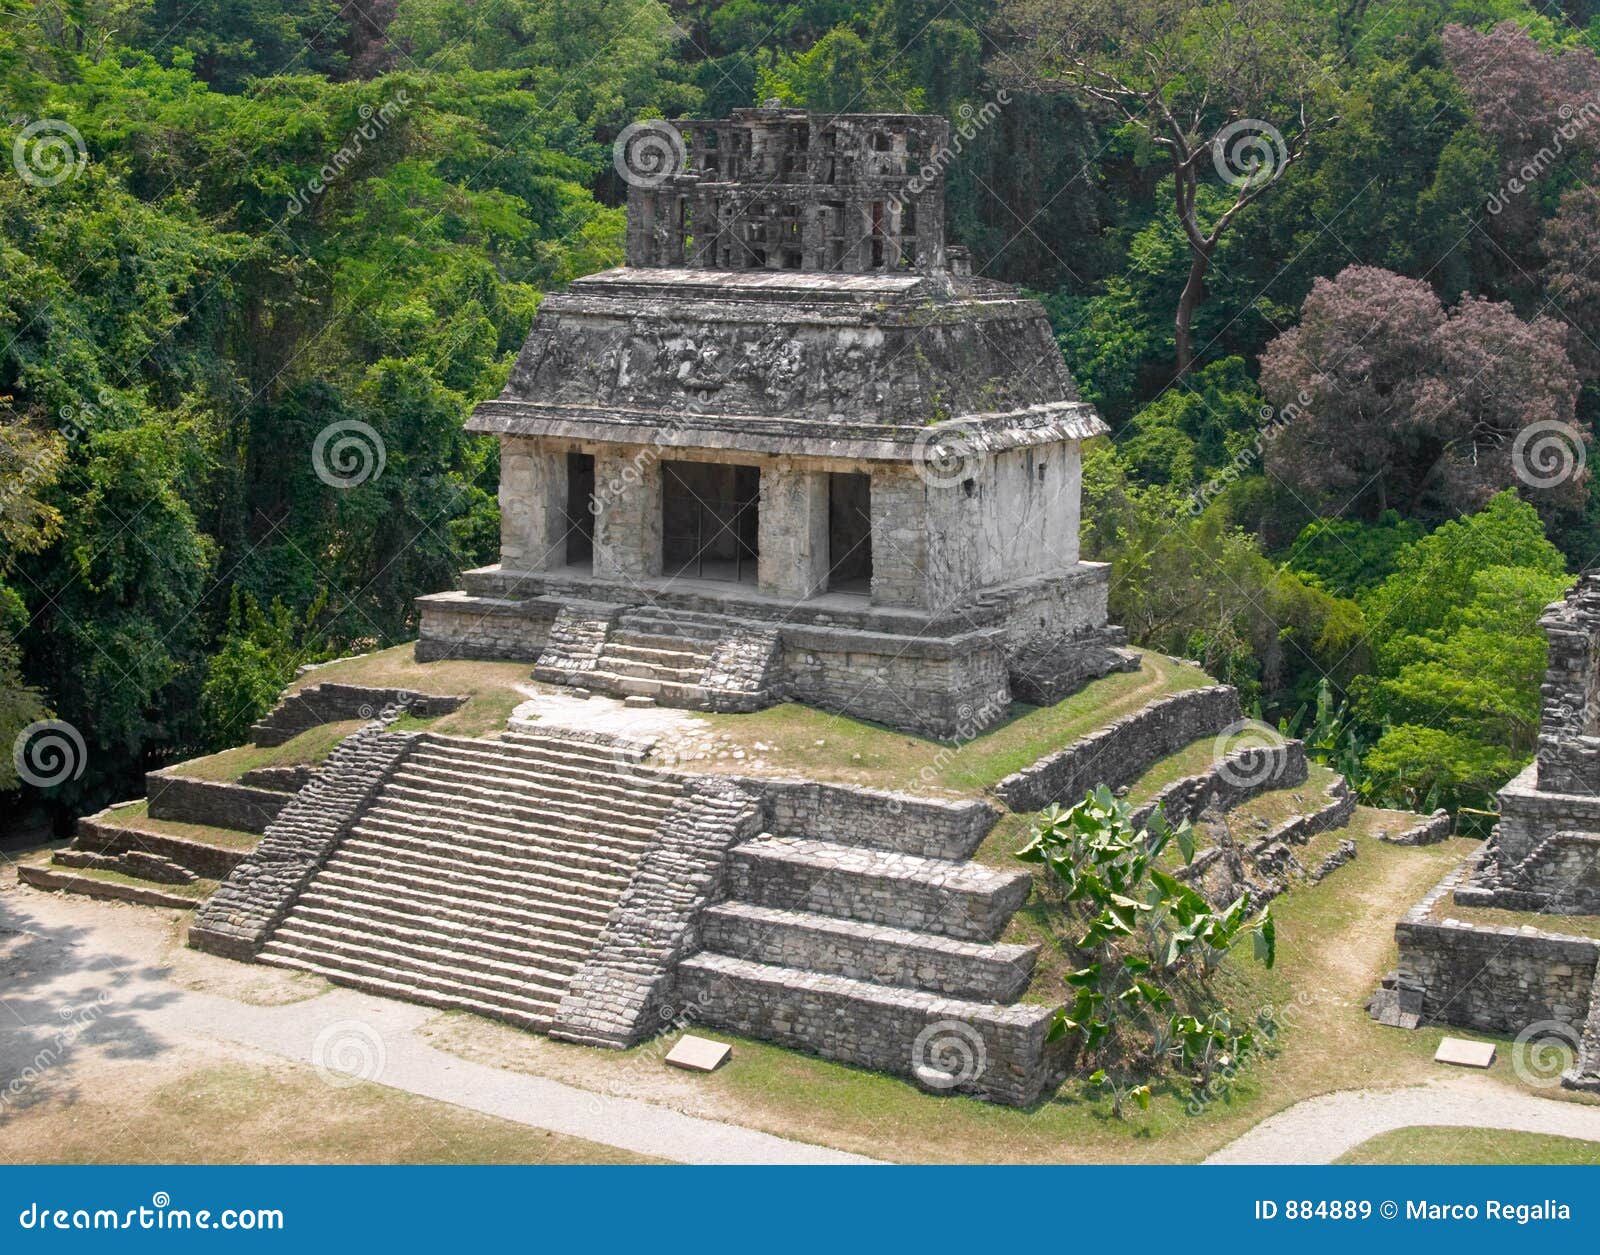 palenque archaeological site, mexico